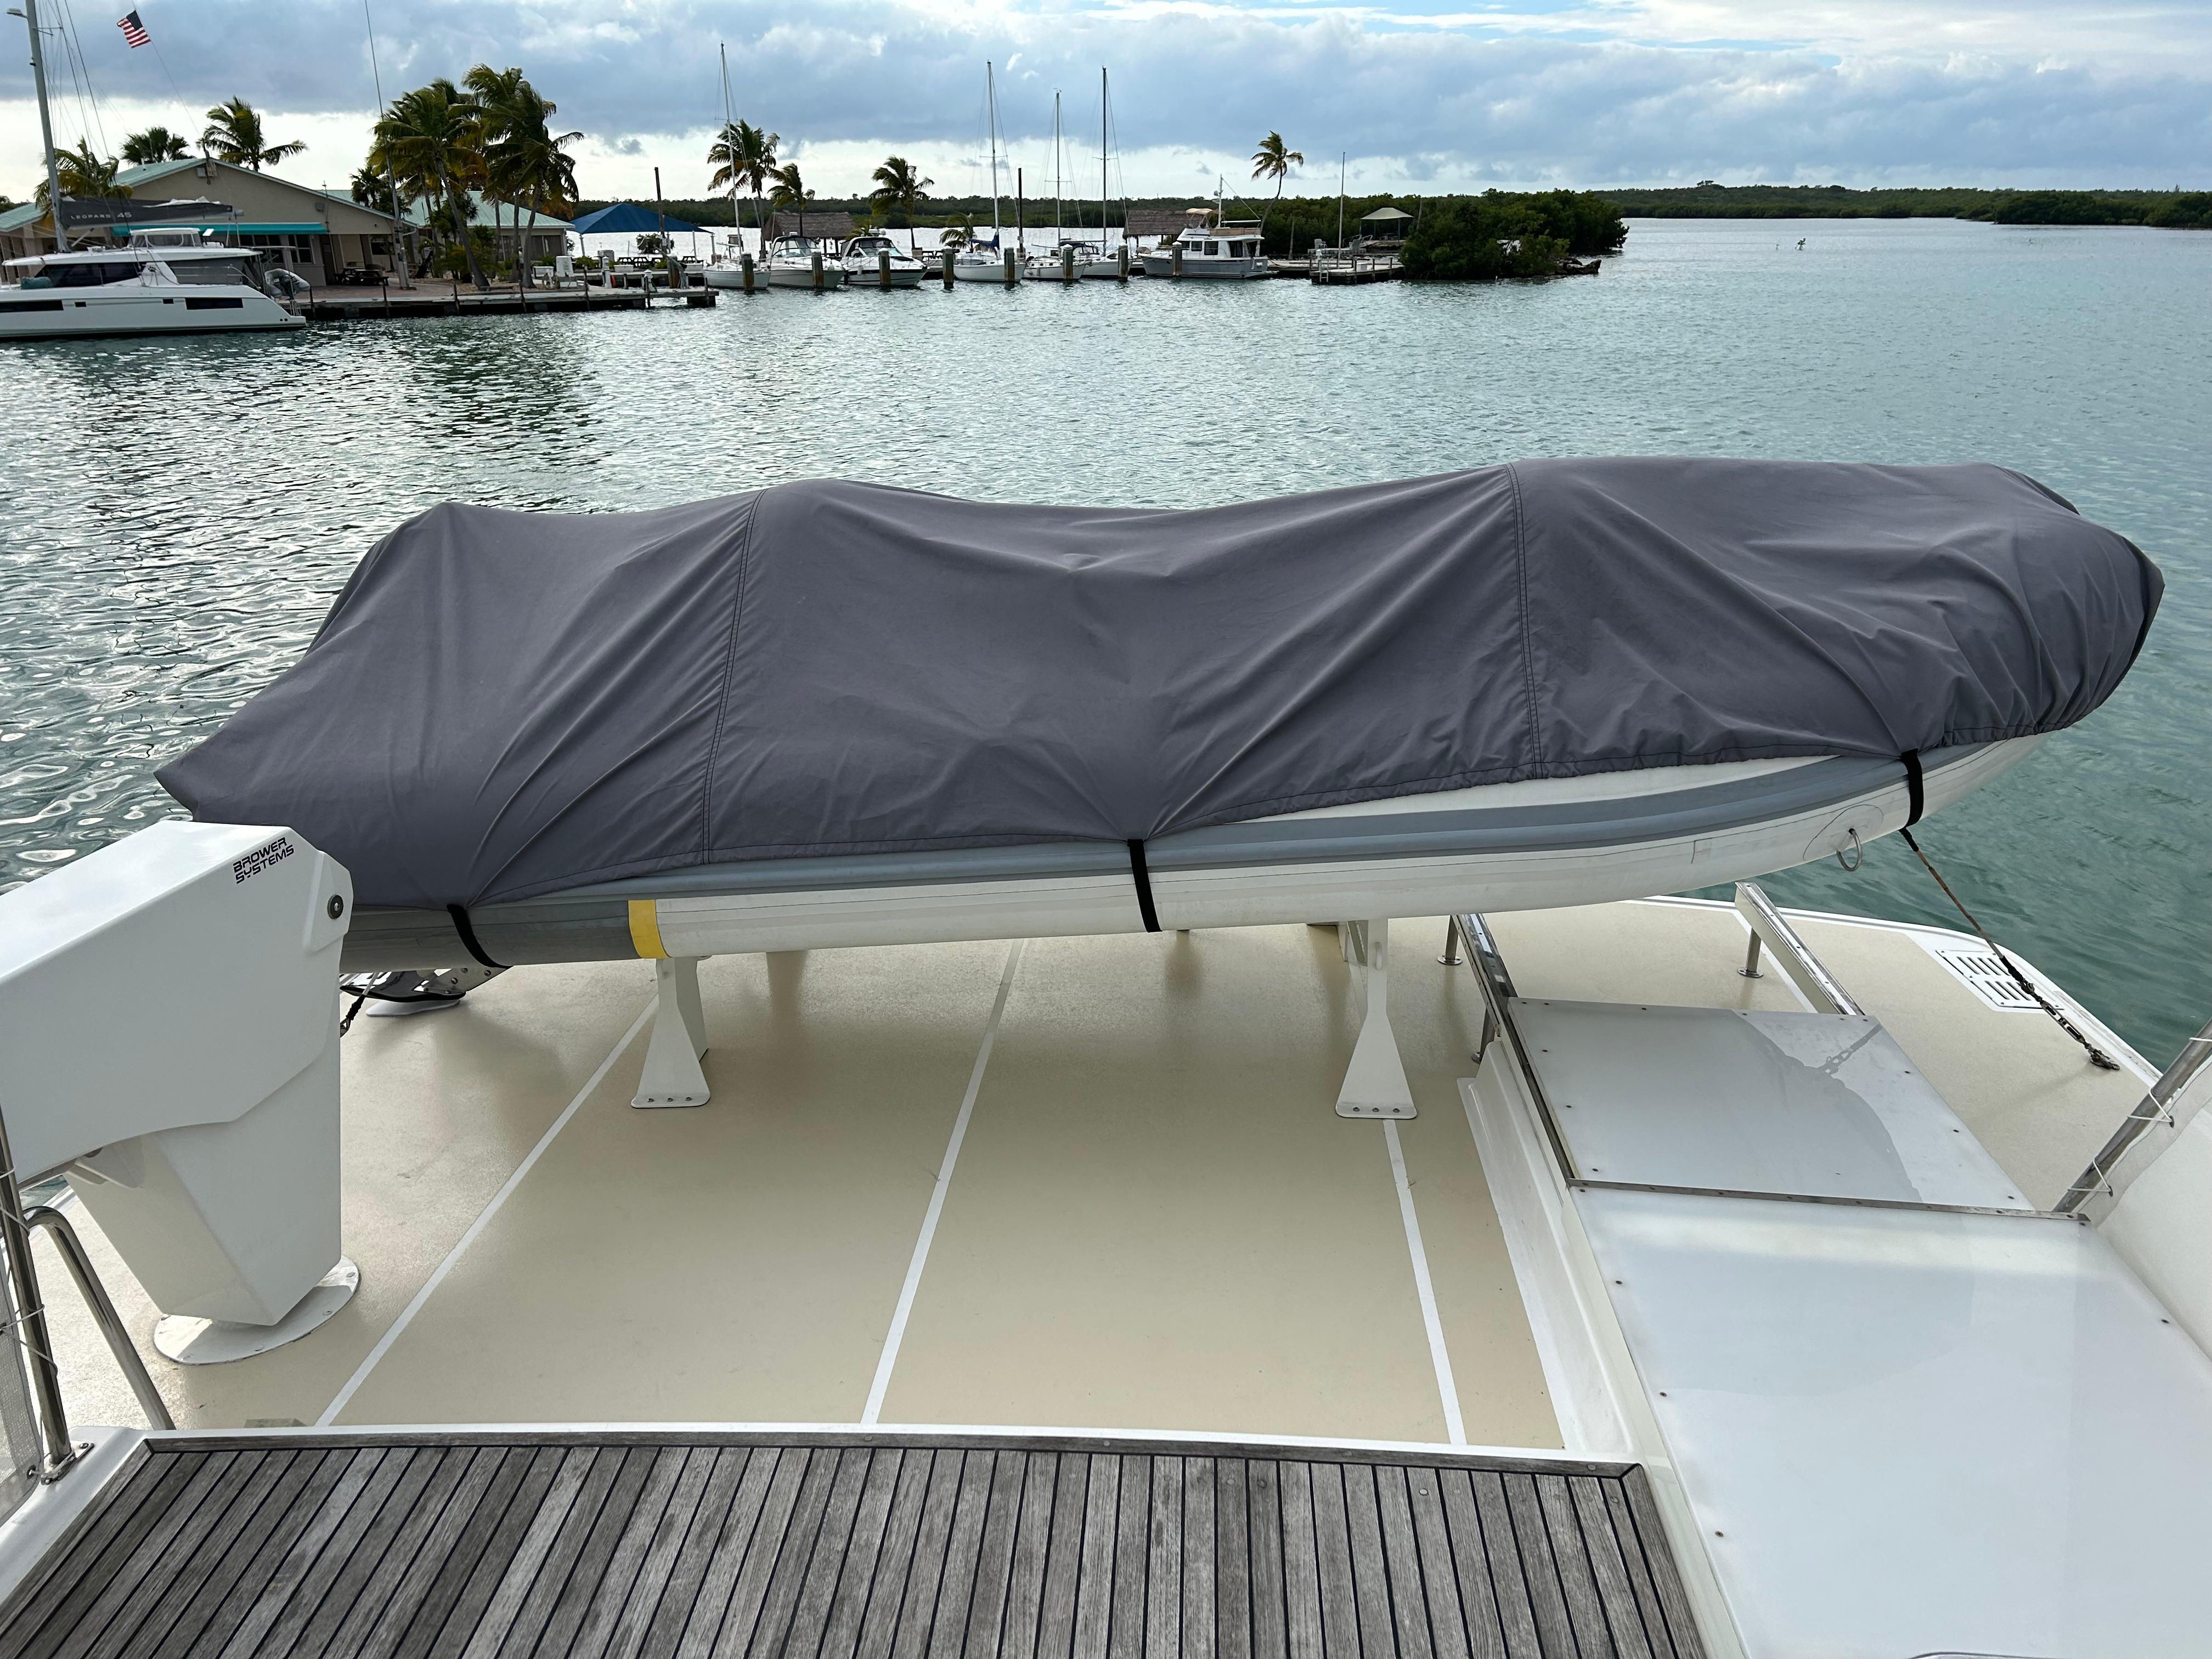 Zar Tender Under Cover On Boat Deck